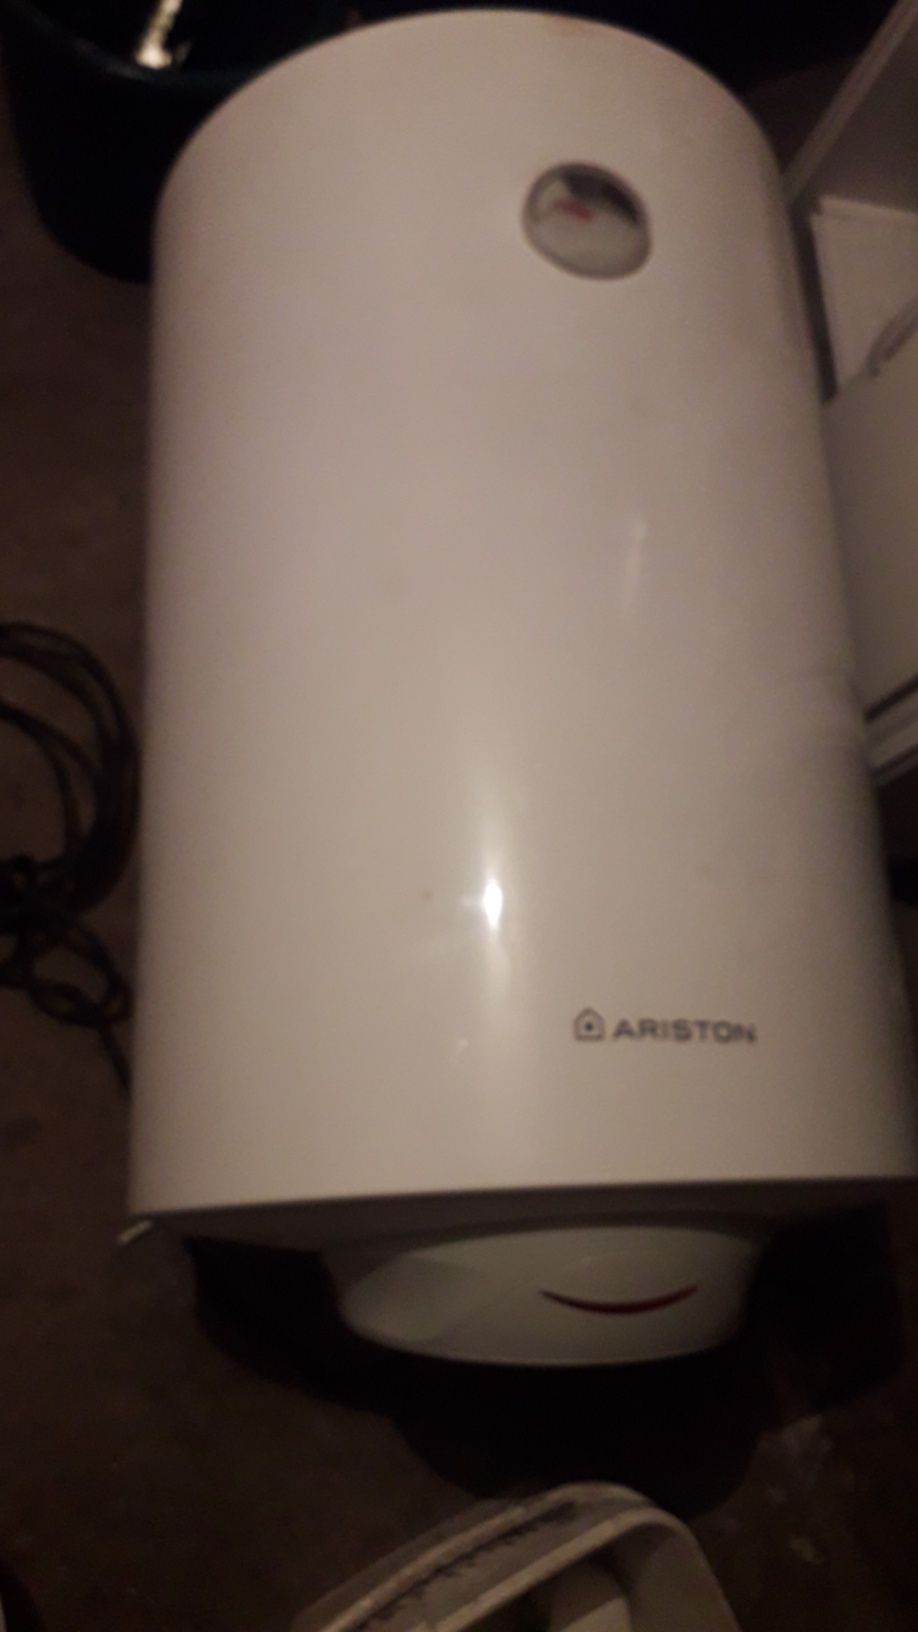 Boiler ariston 100 litri folosit puțin